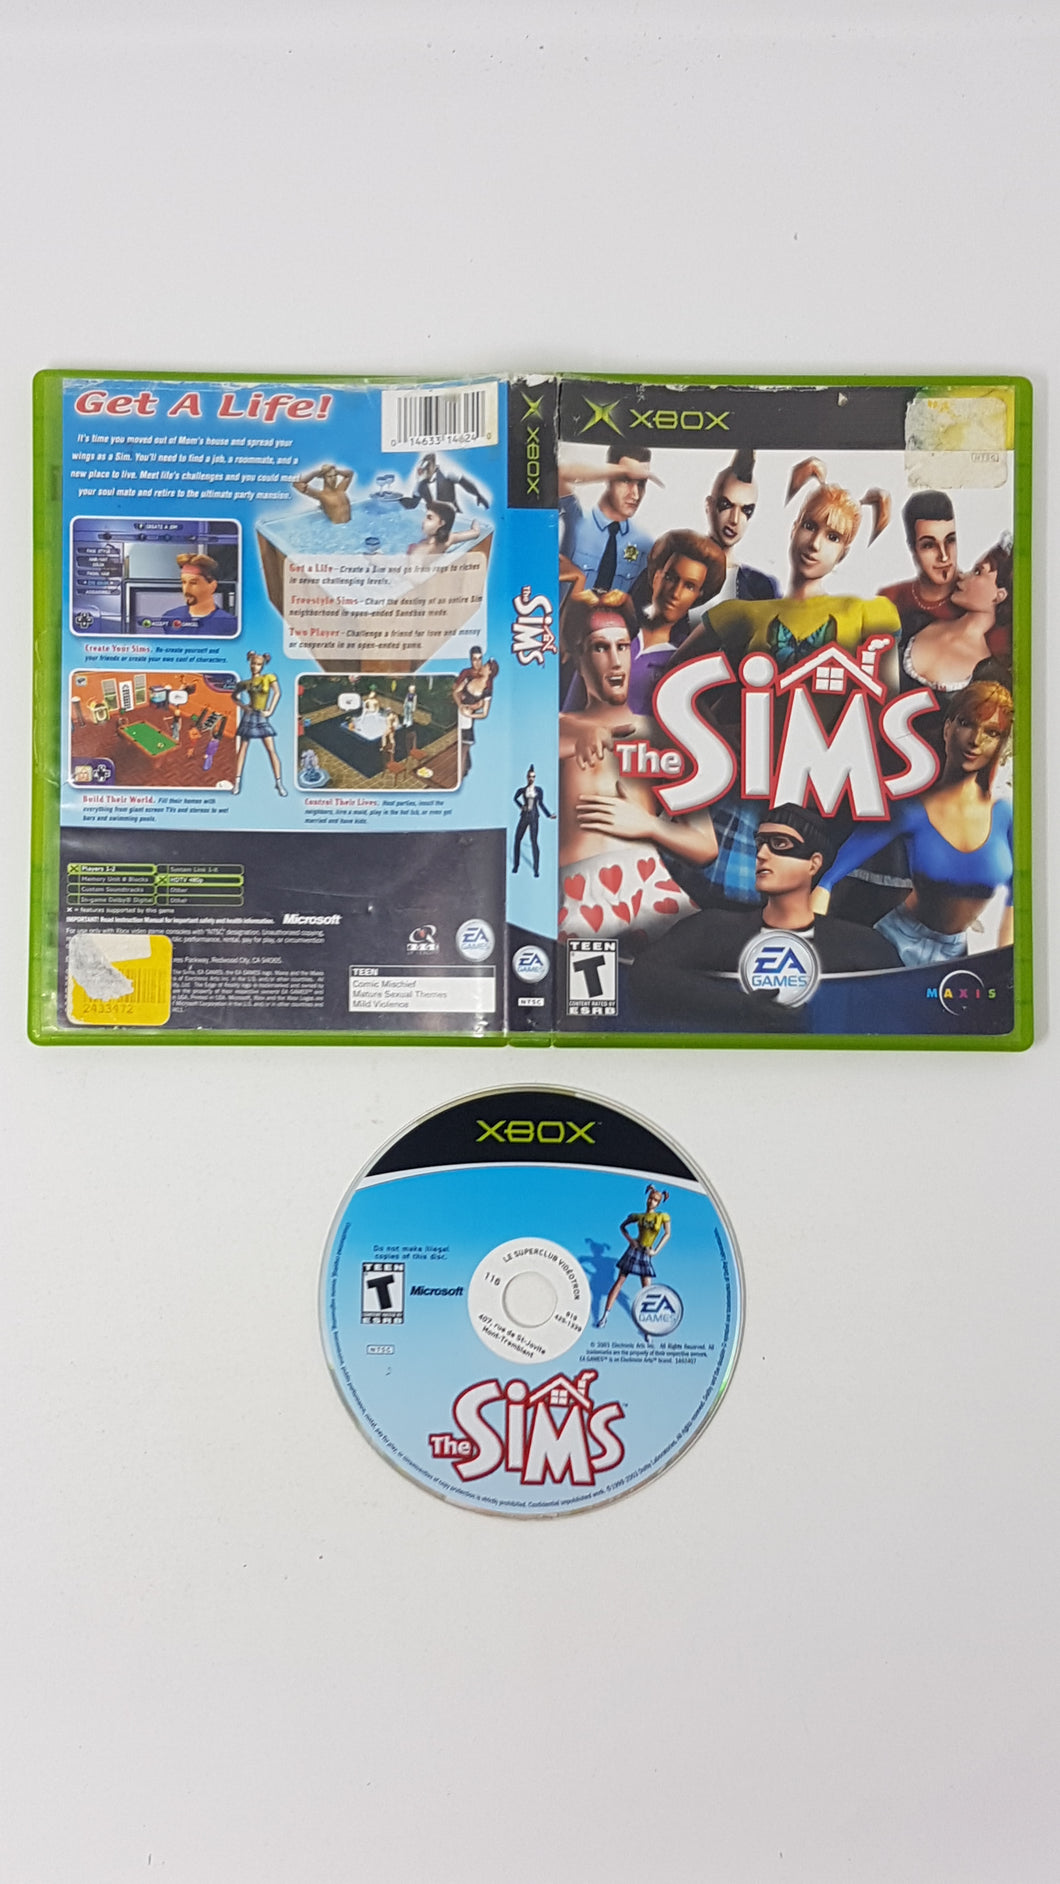 The Sims - Microsoft Xbox